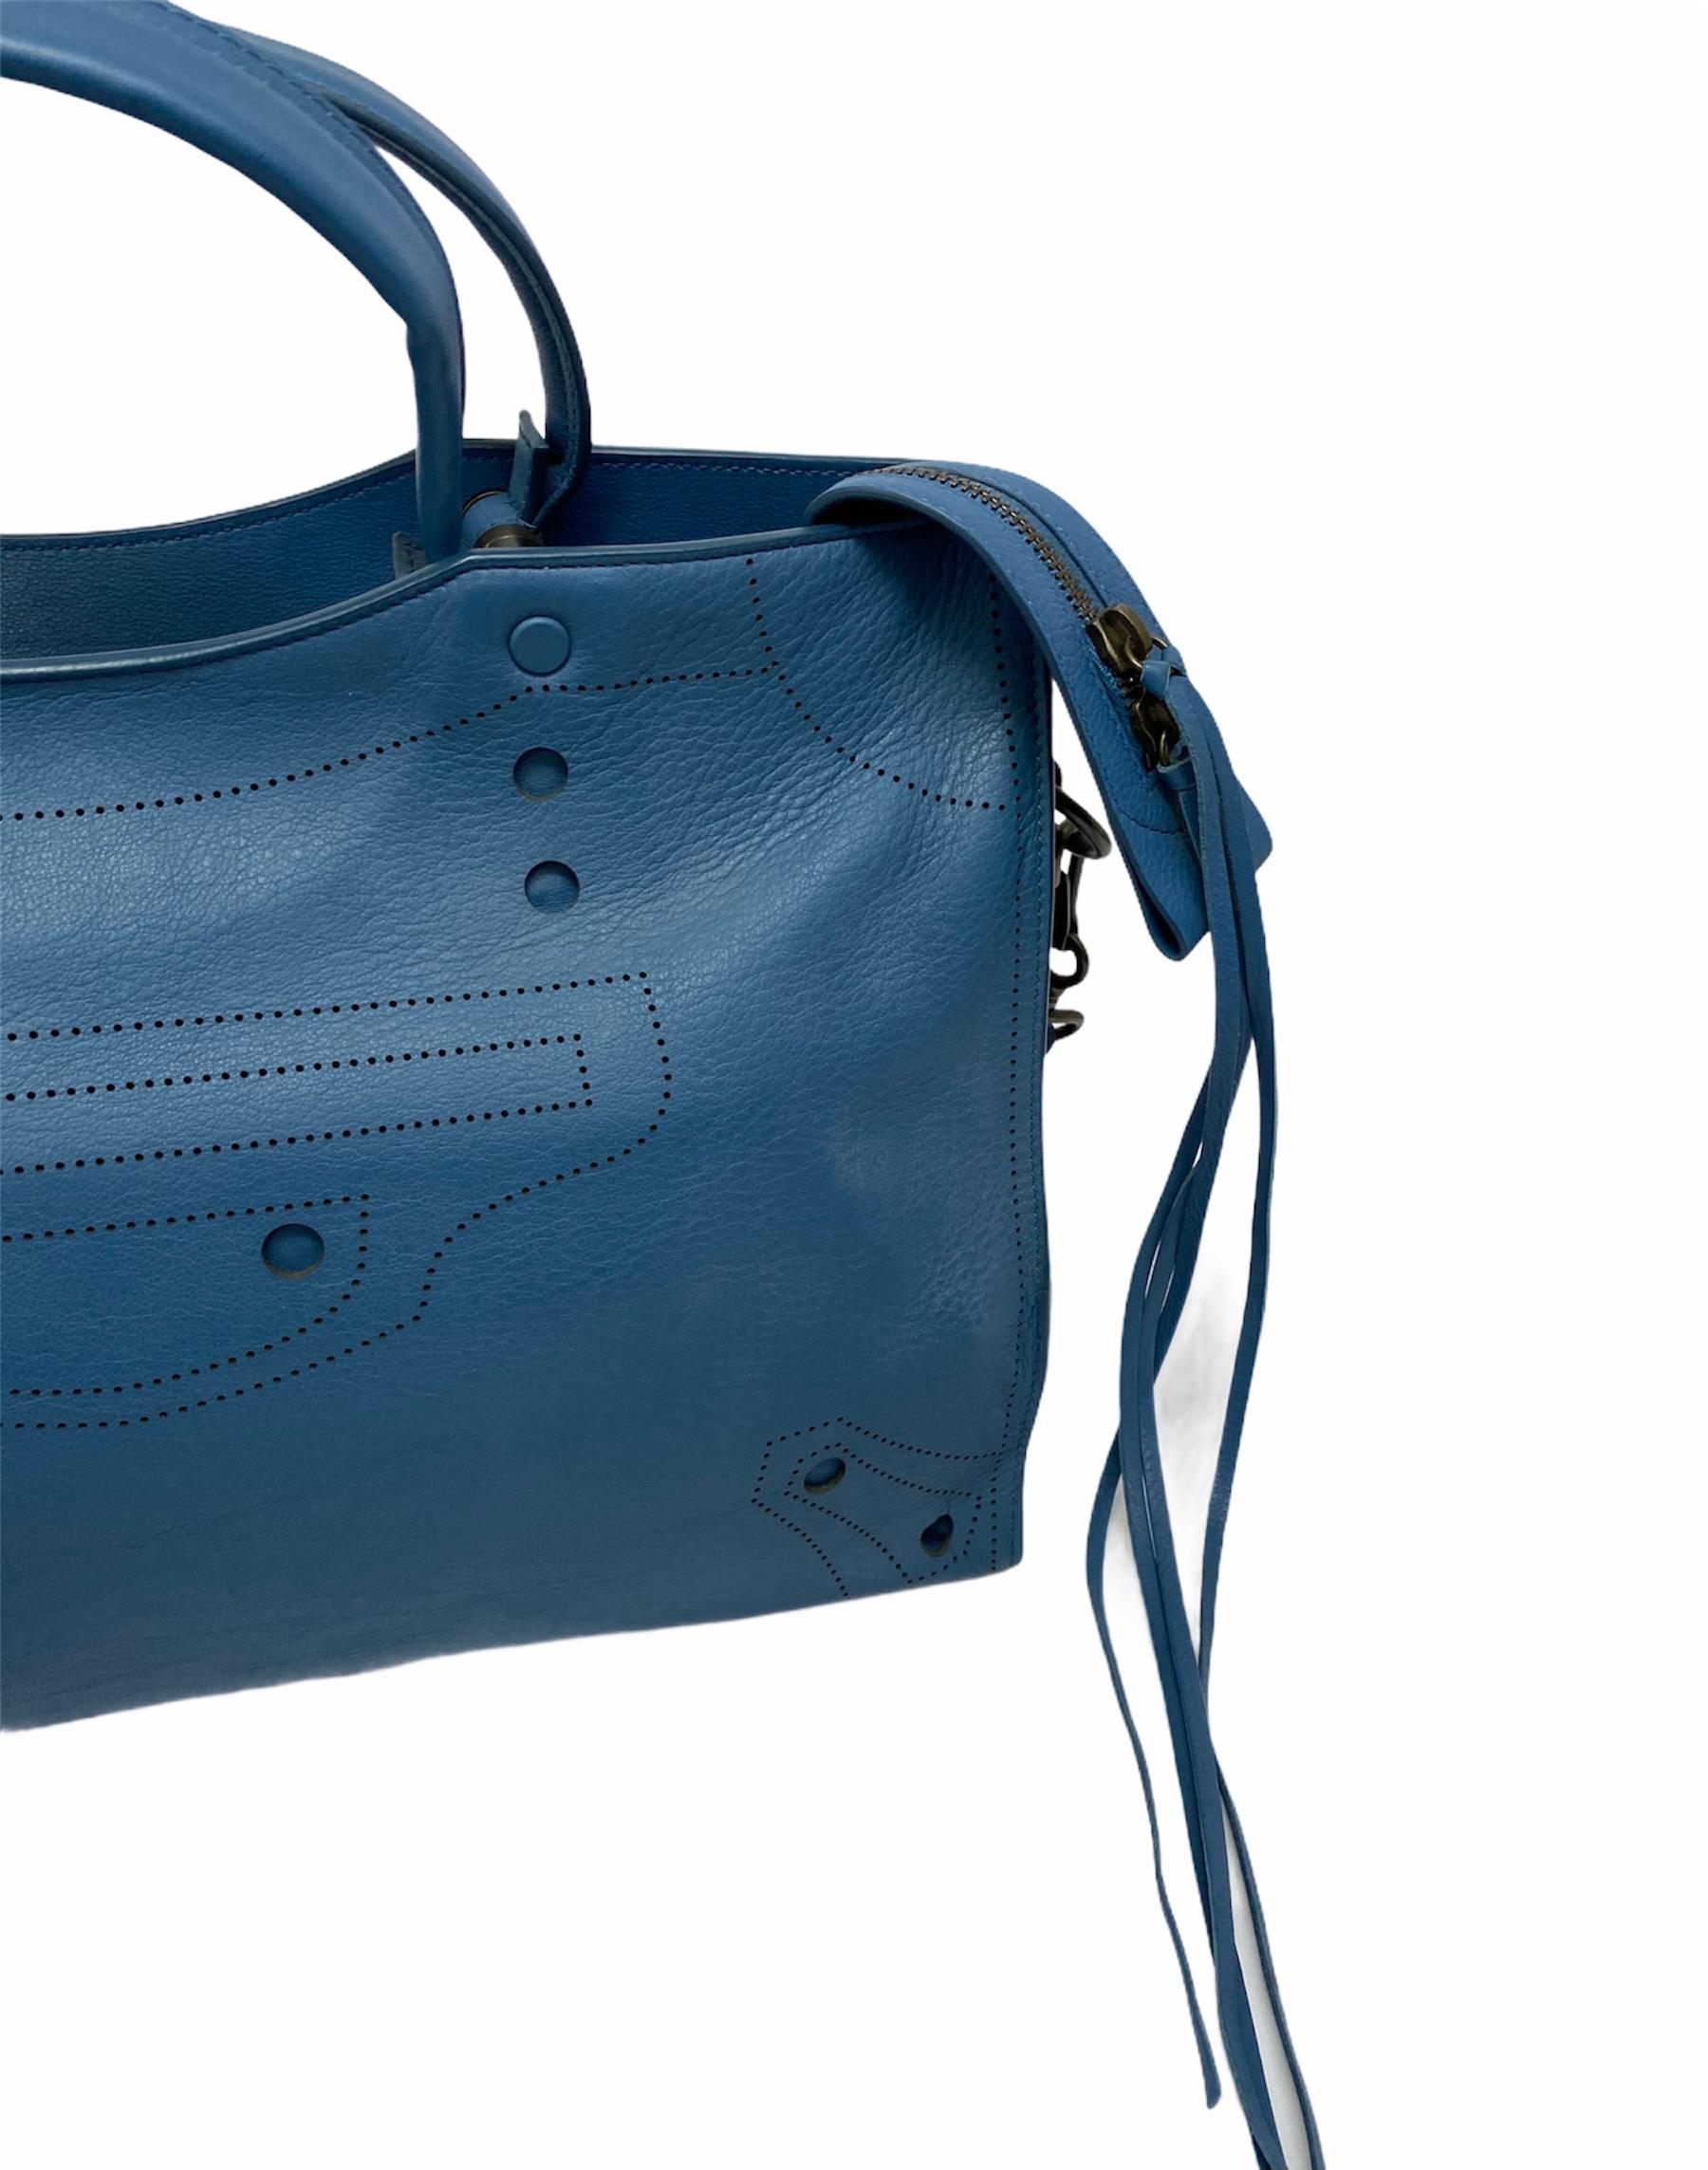 Balenciaga Blue Leather City Bag 4